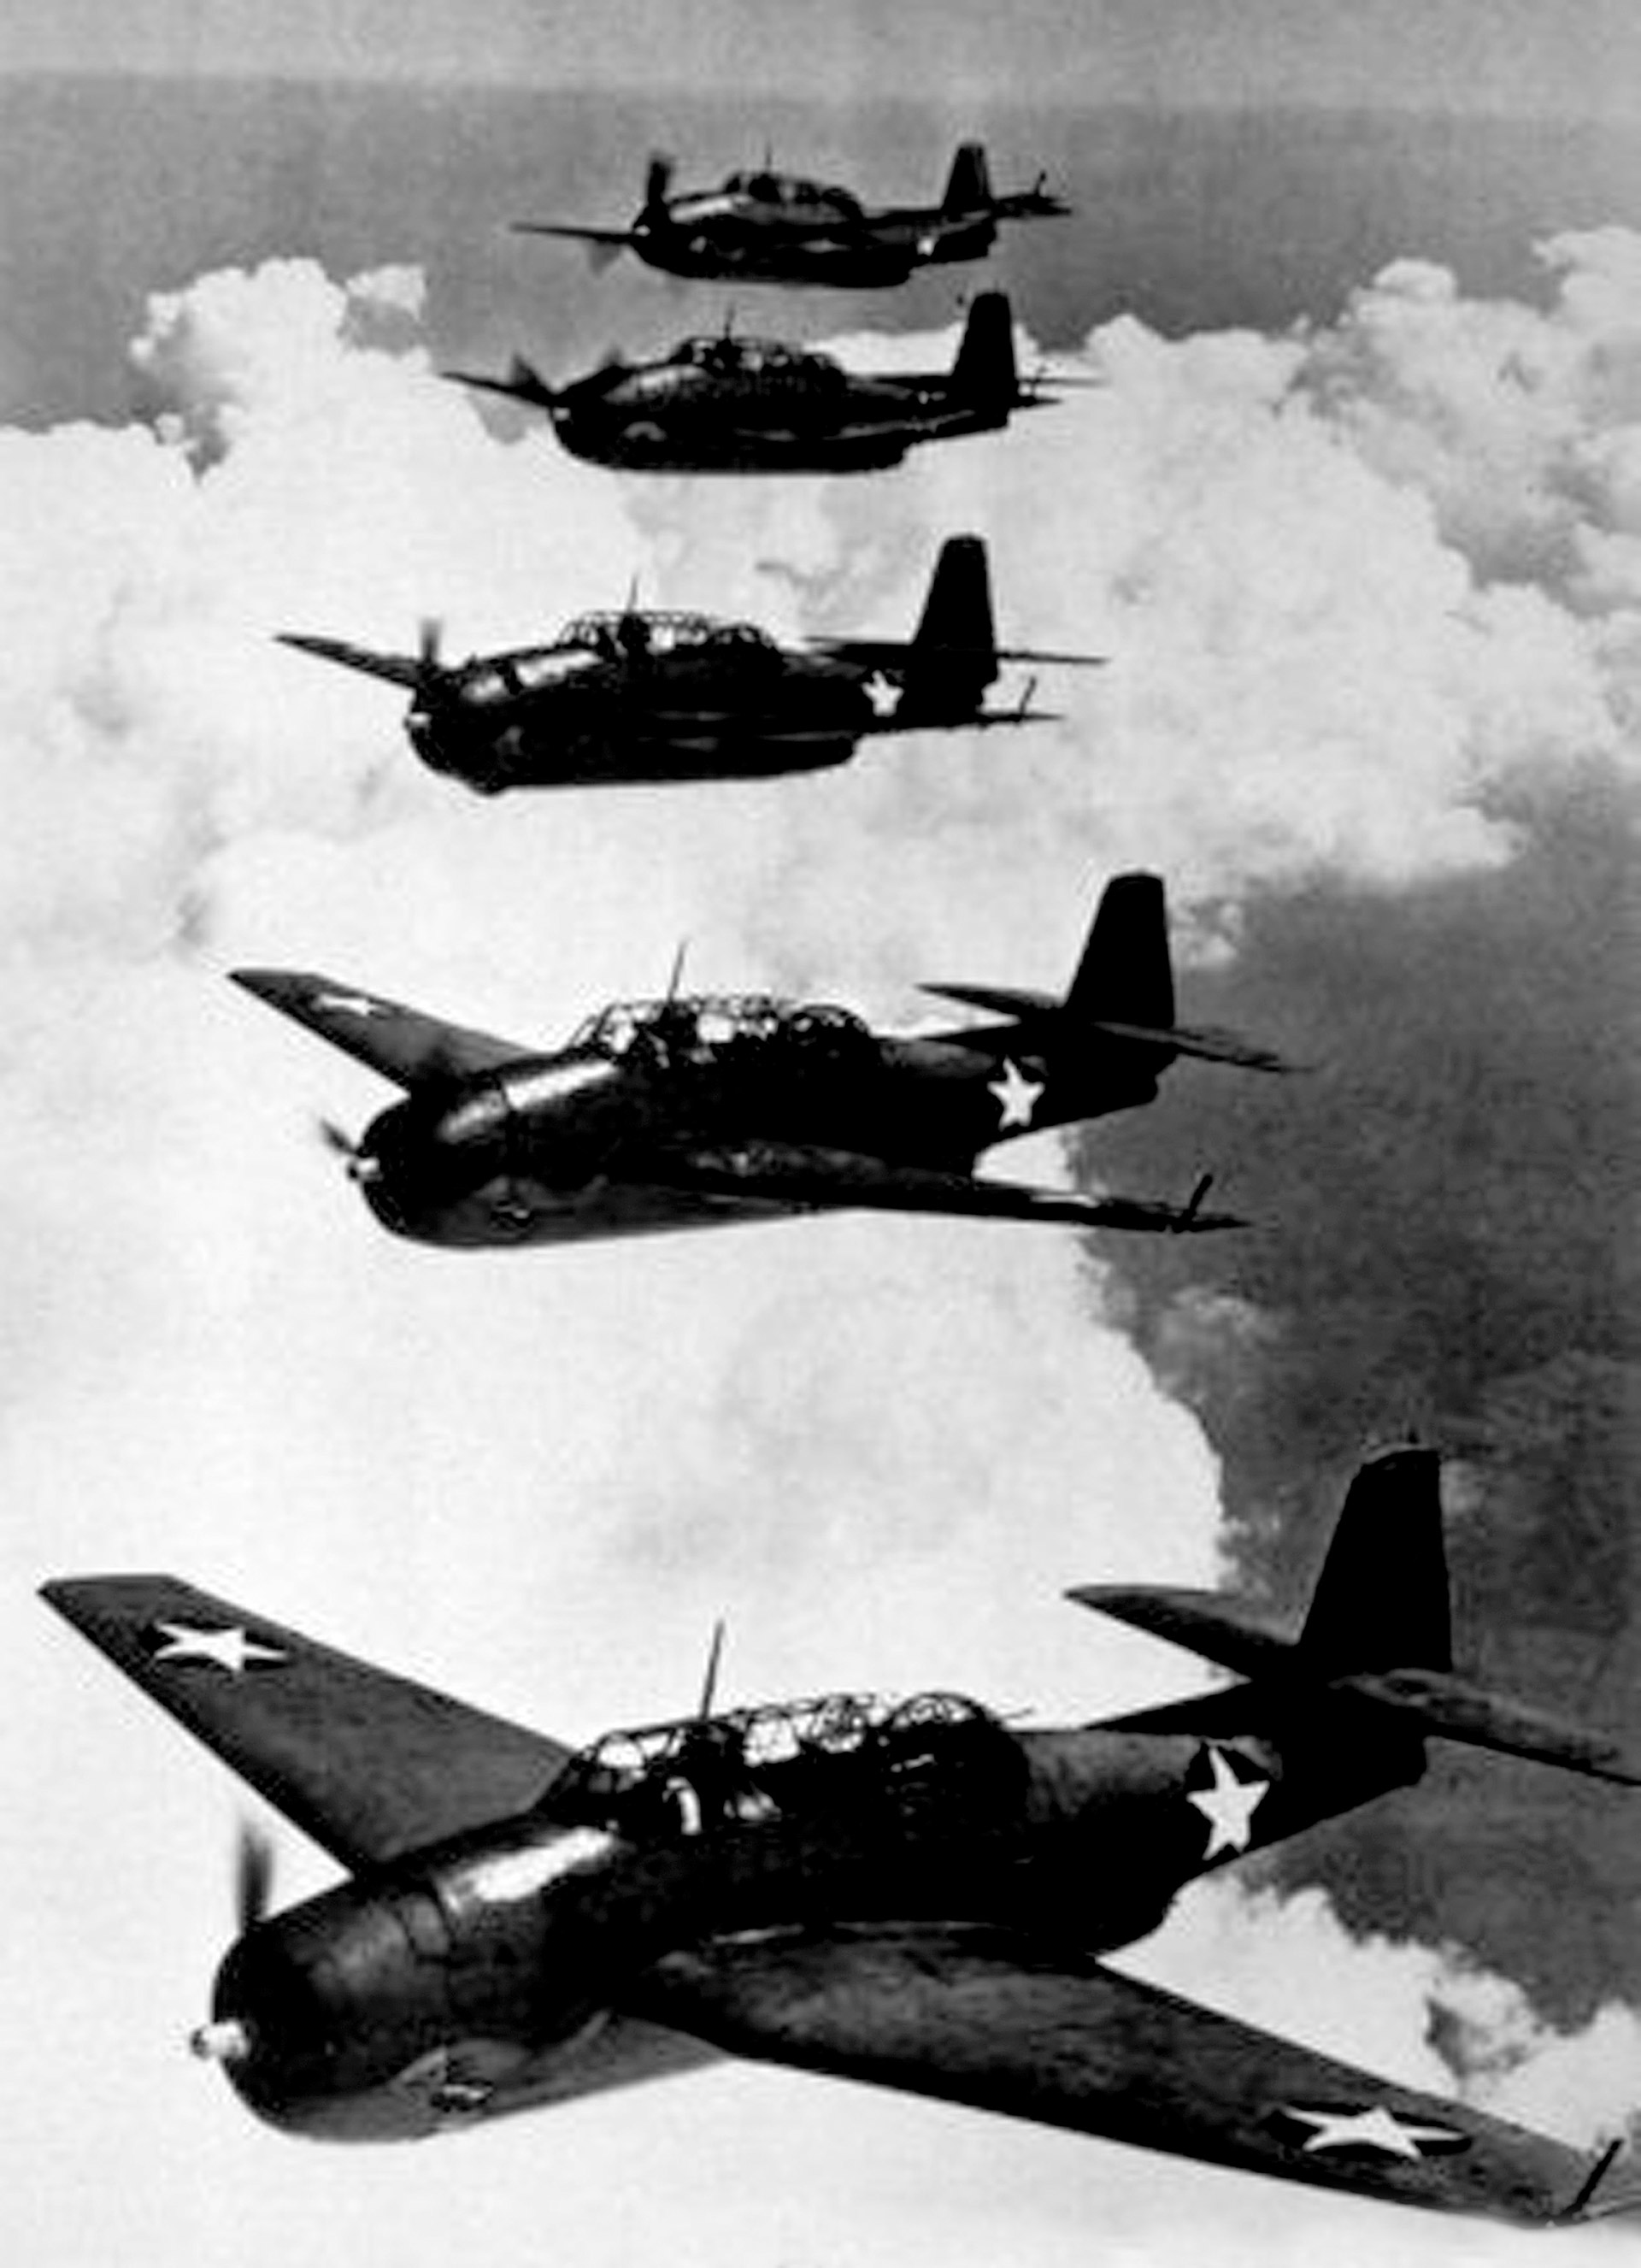 Una cuadrilla de 5 aviones Avenger similar a la que se perdió en 1945 (Photo by Apic/Getty Images)